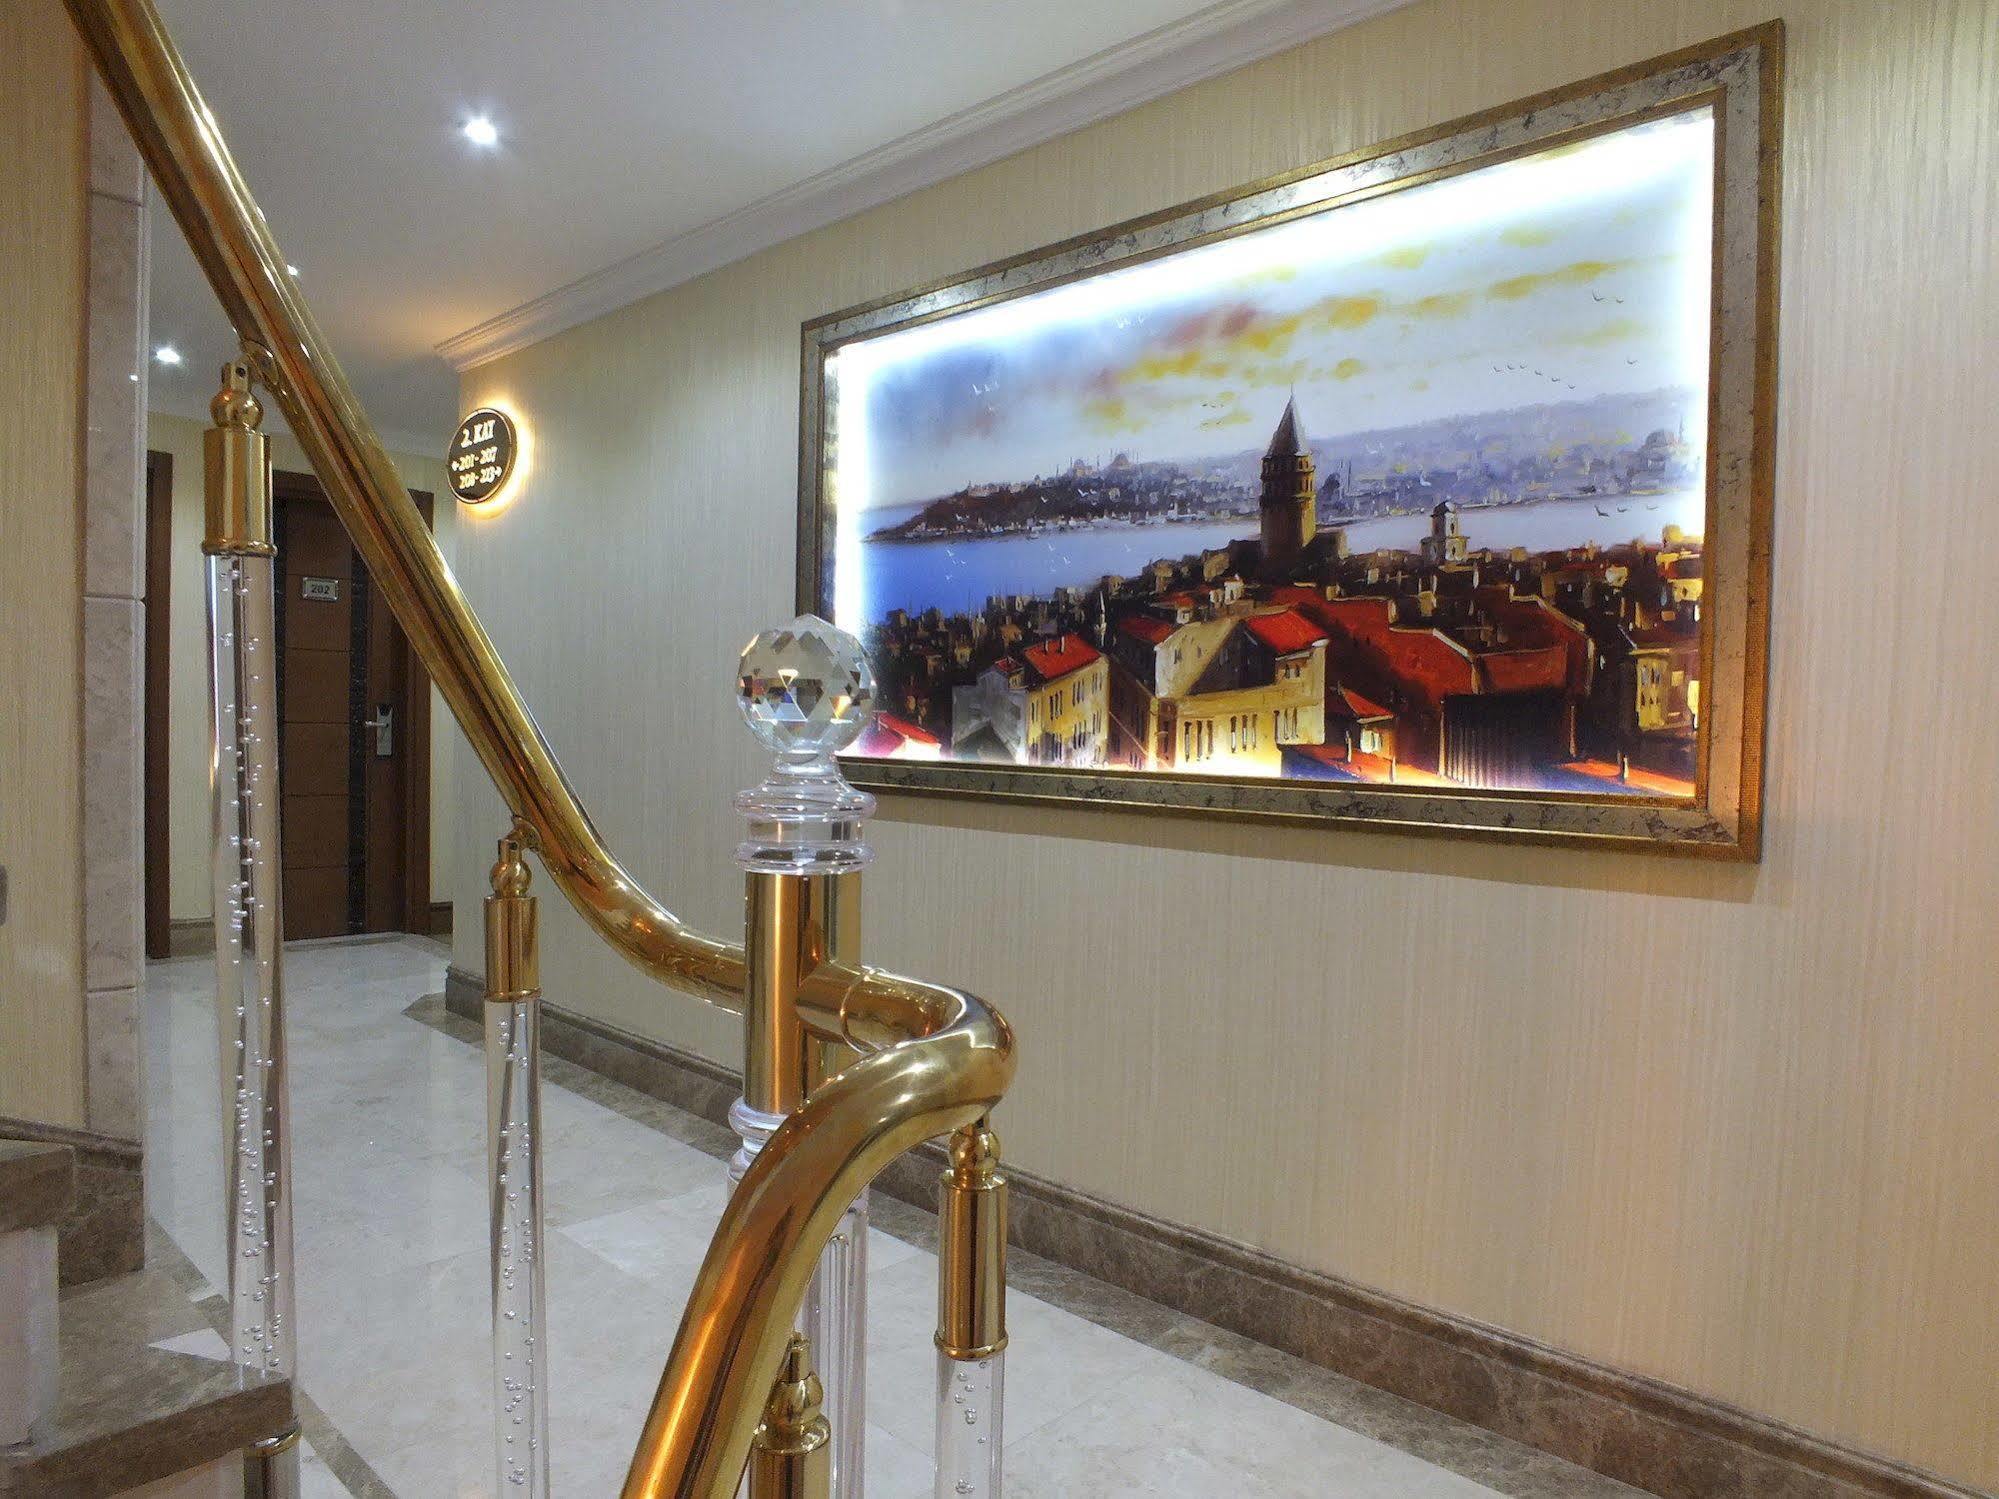 Grand Asiyan Hotel Istanbul Exterior foto